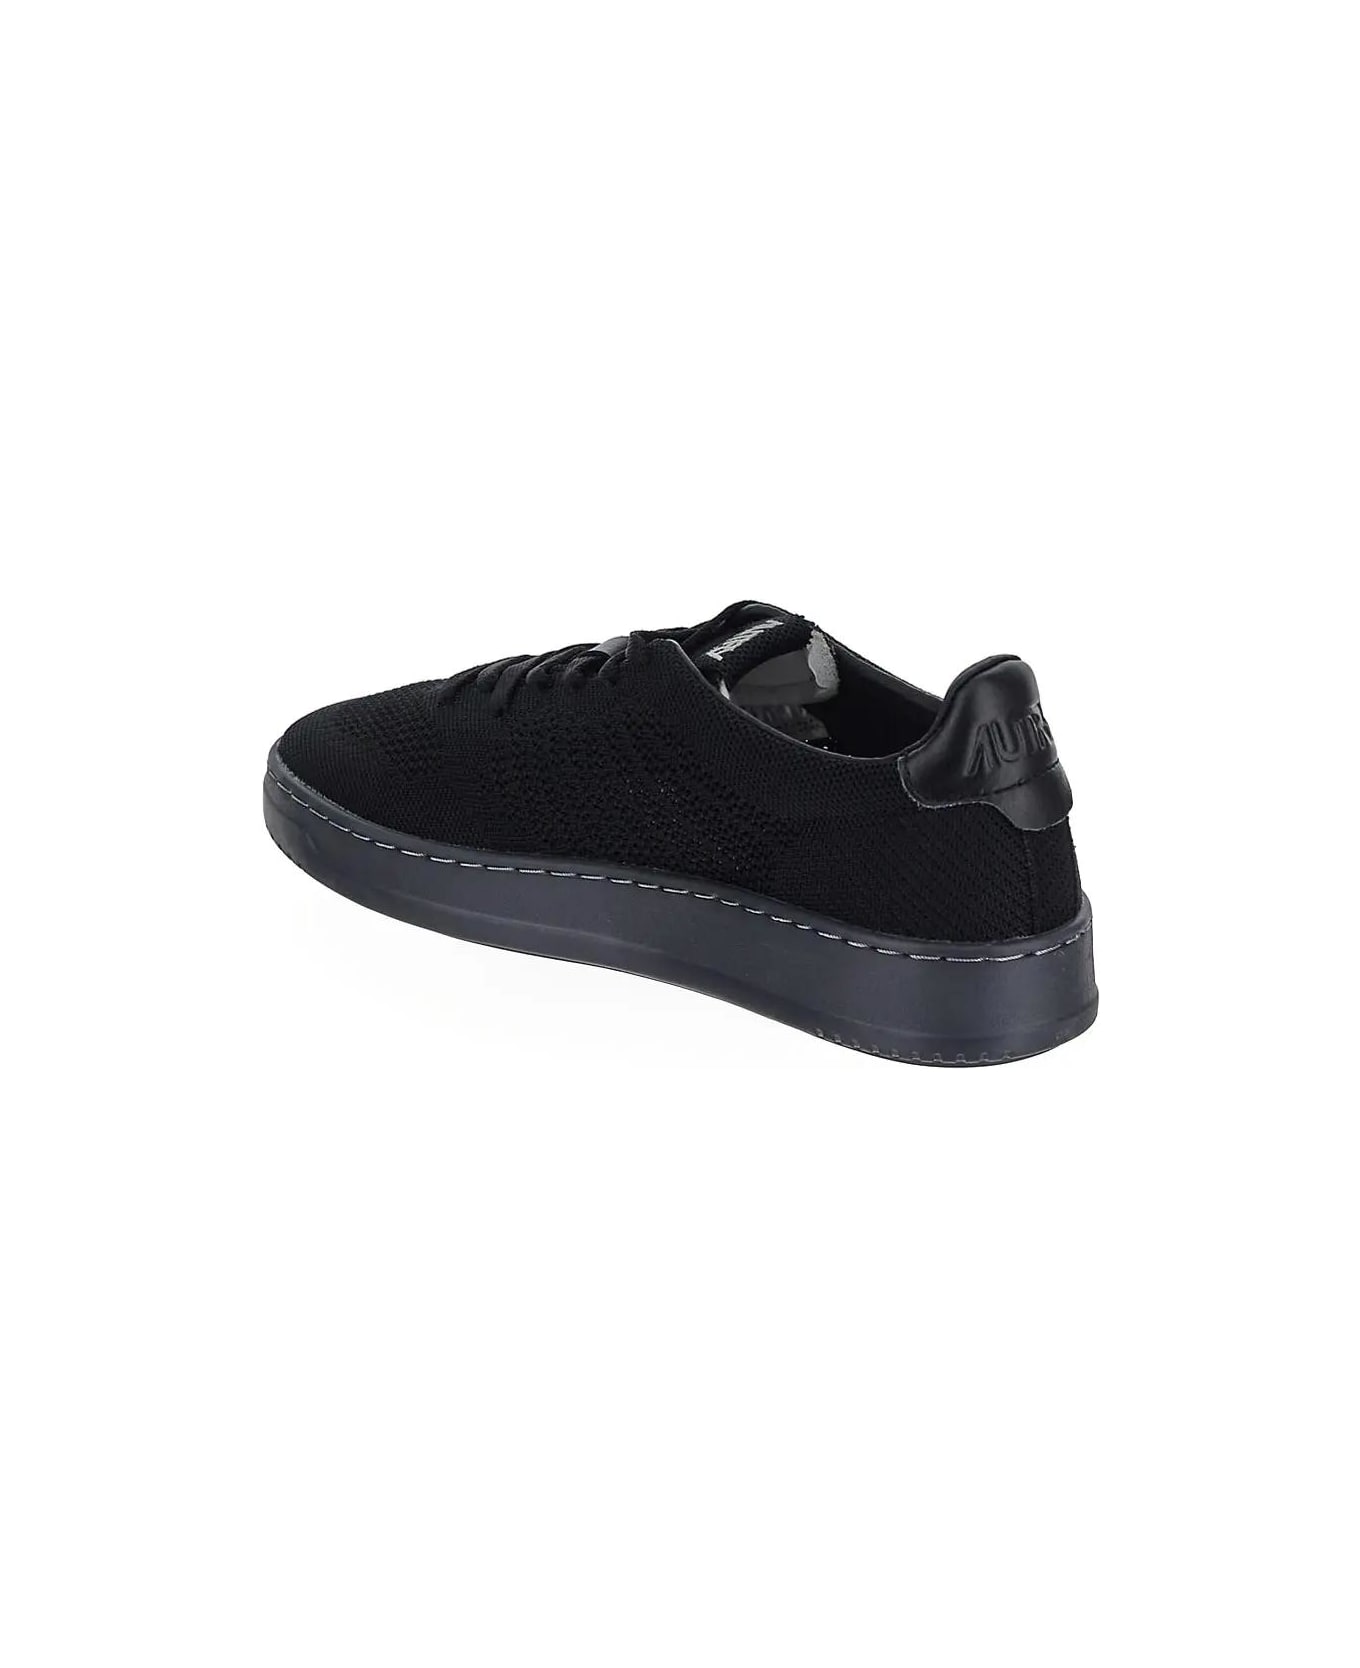 Autry Easeknit Low Sneakers - Black